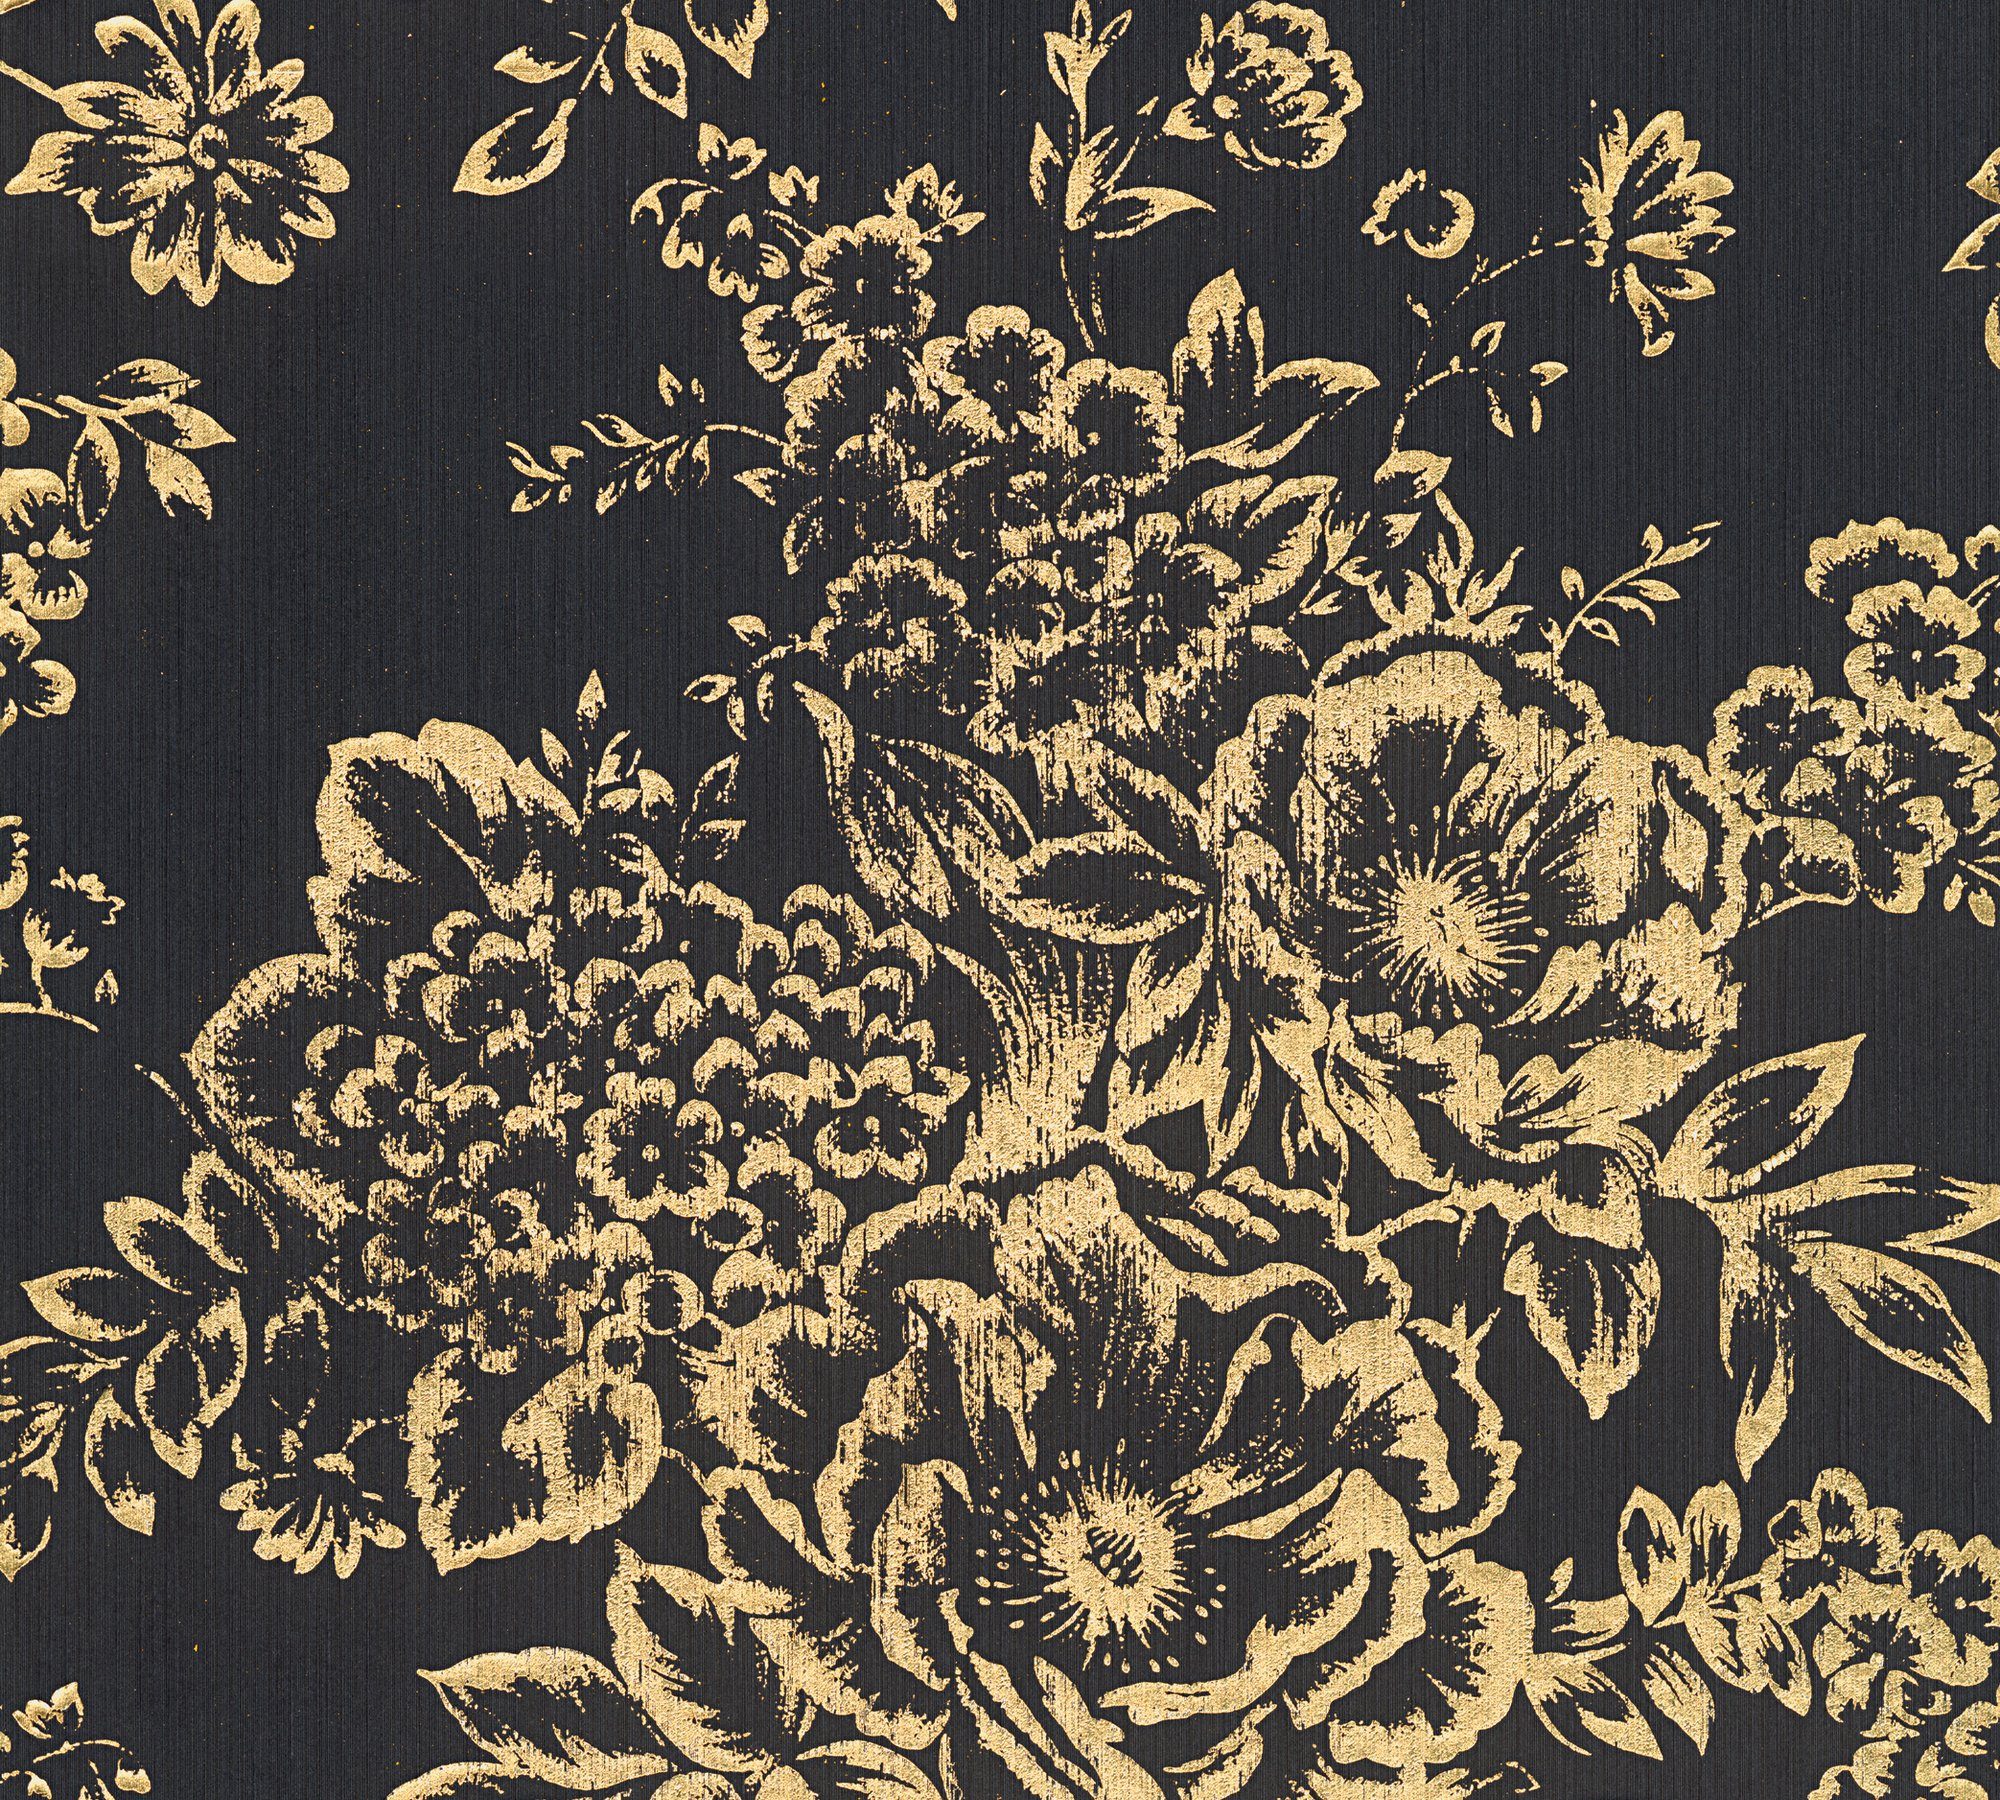 Blumen Textiltapete Création Paper Tapete A.S. matt, samtig, Silk, Architects Barocktapete floral, Metallic gold/schwarz glänzend,